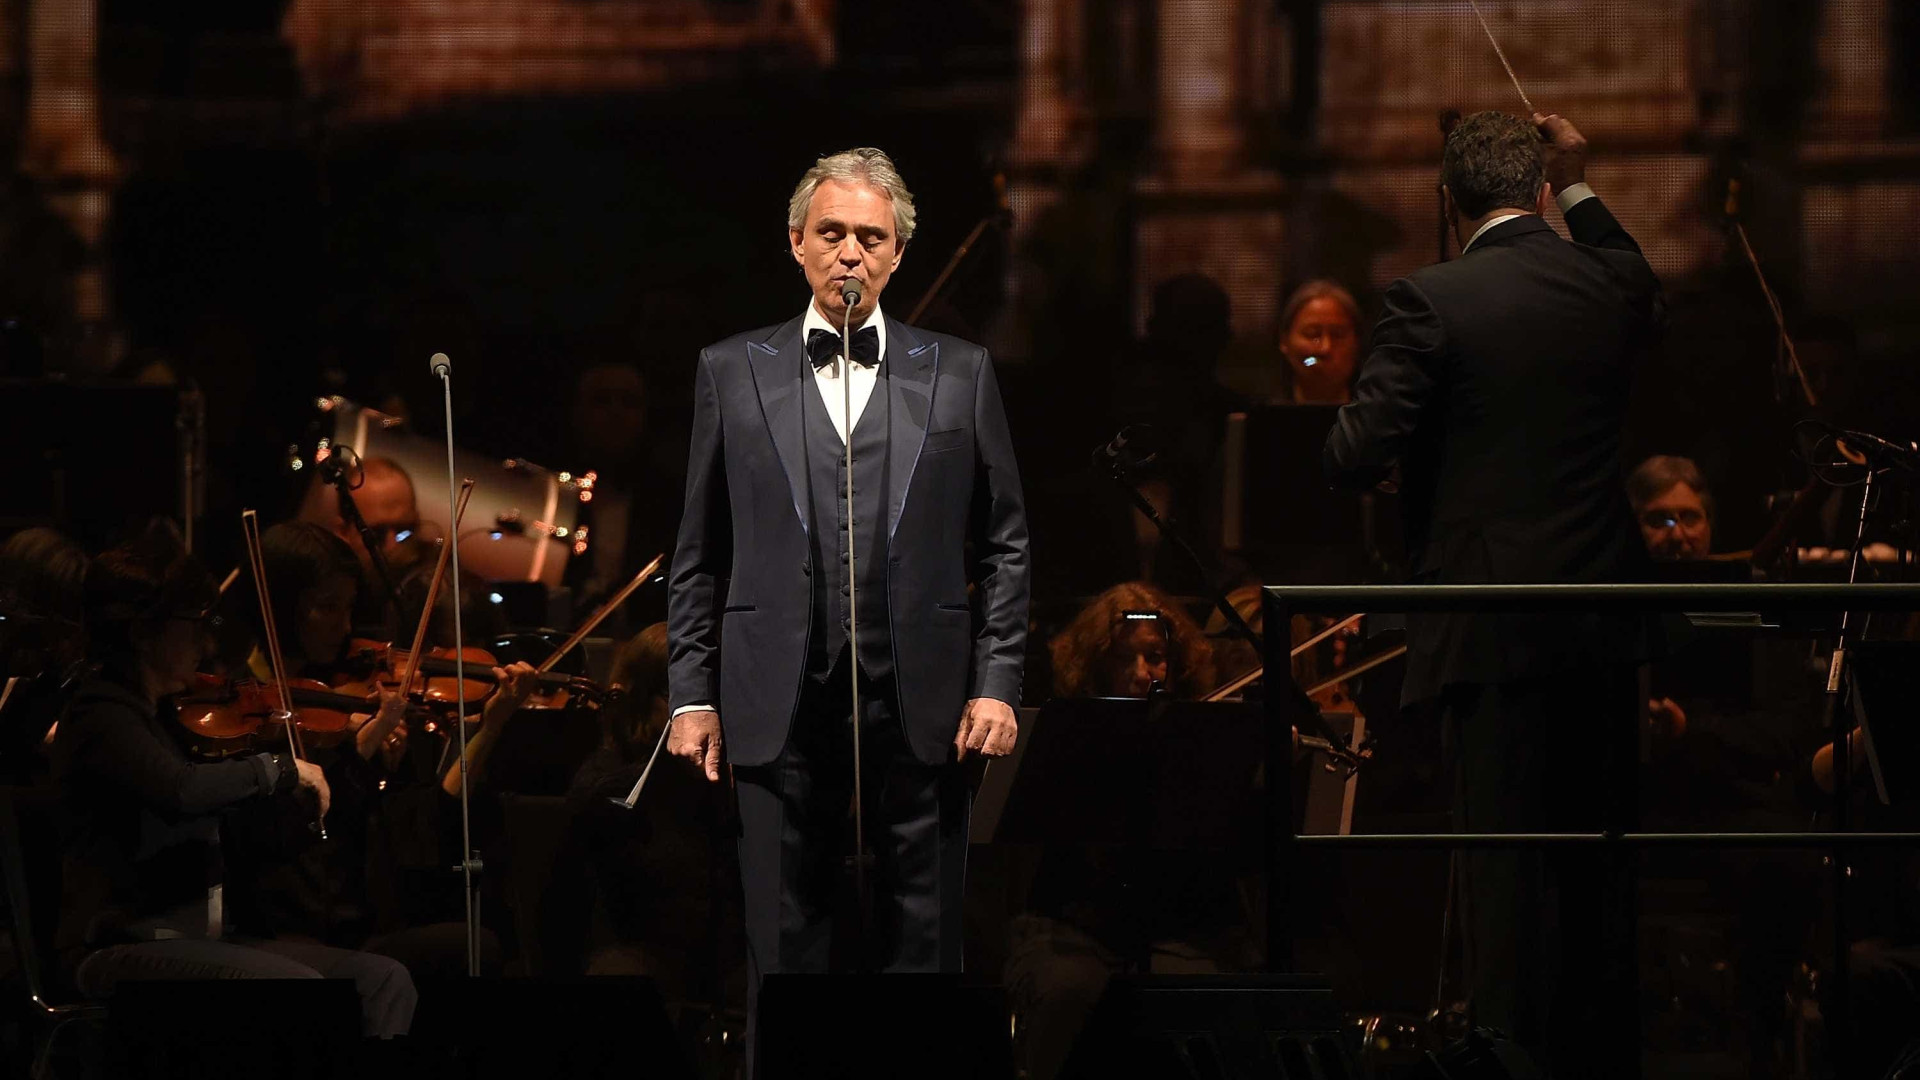 Andrea Bocelli comemora 60 anos e inicia turnê pelo Brasil